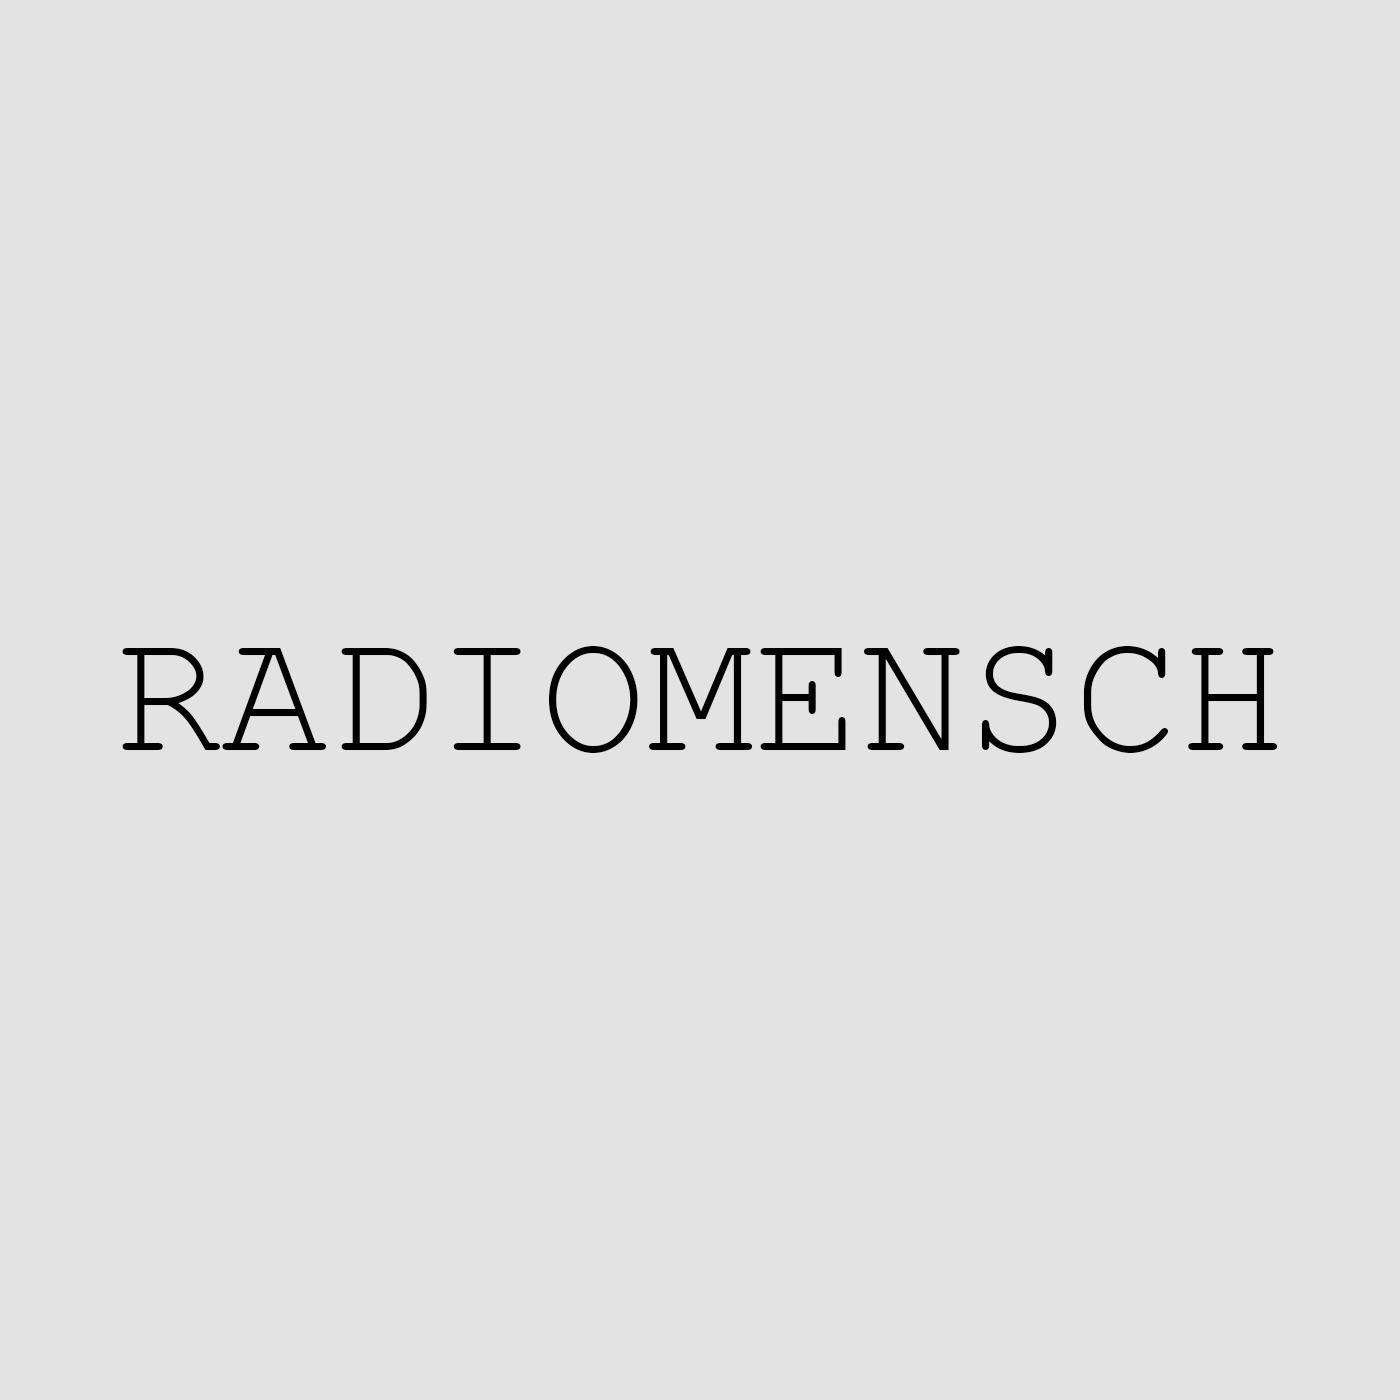 Radiomensch